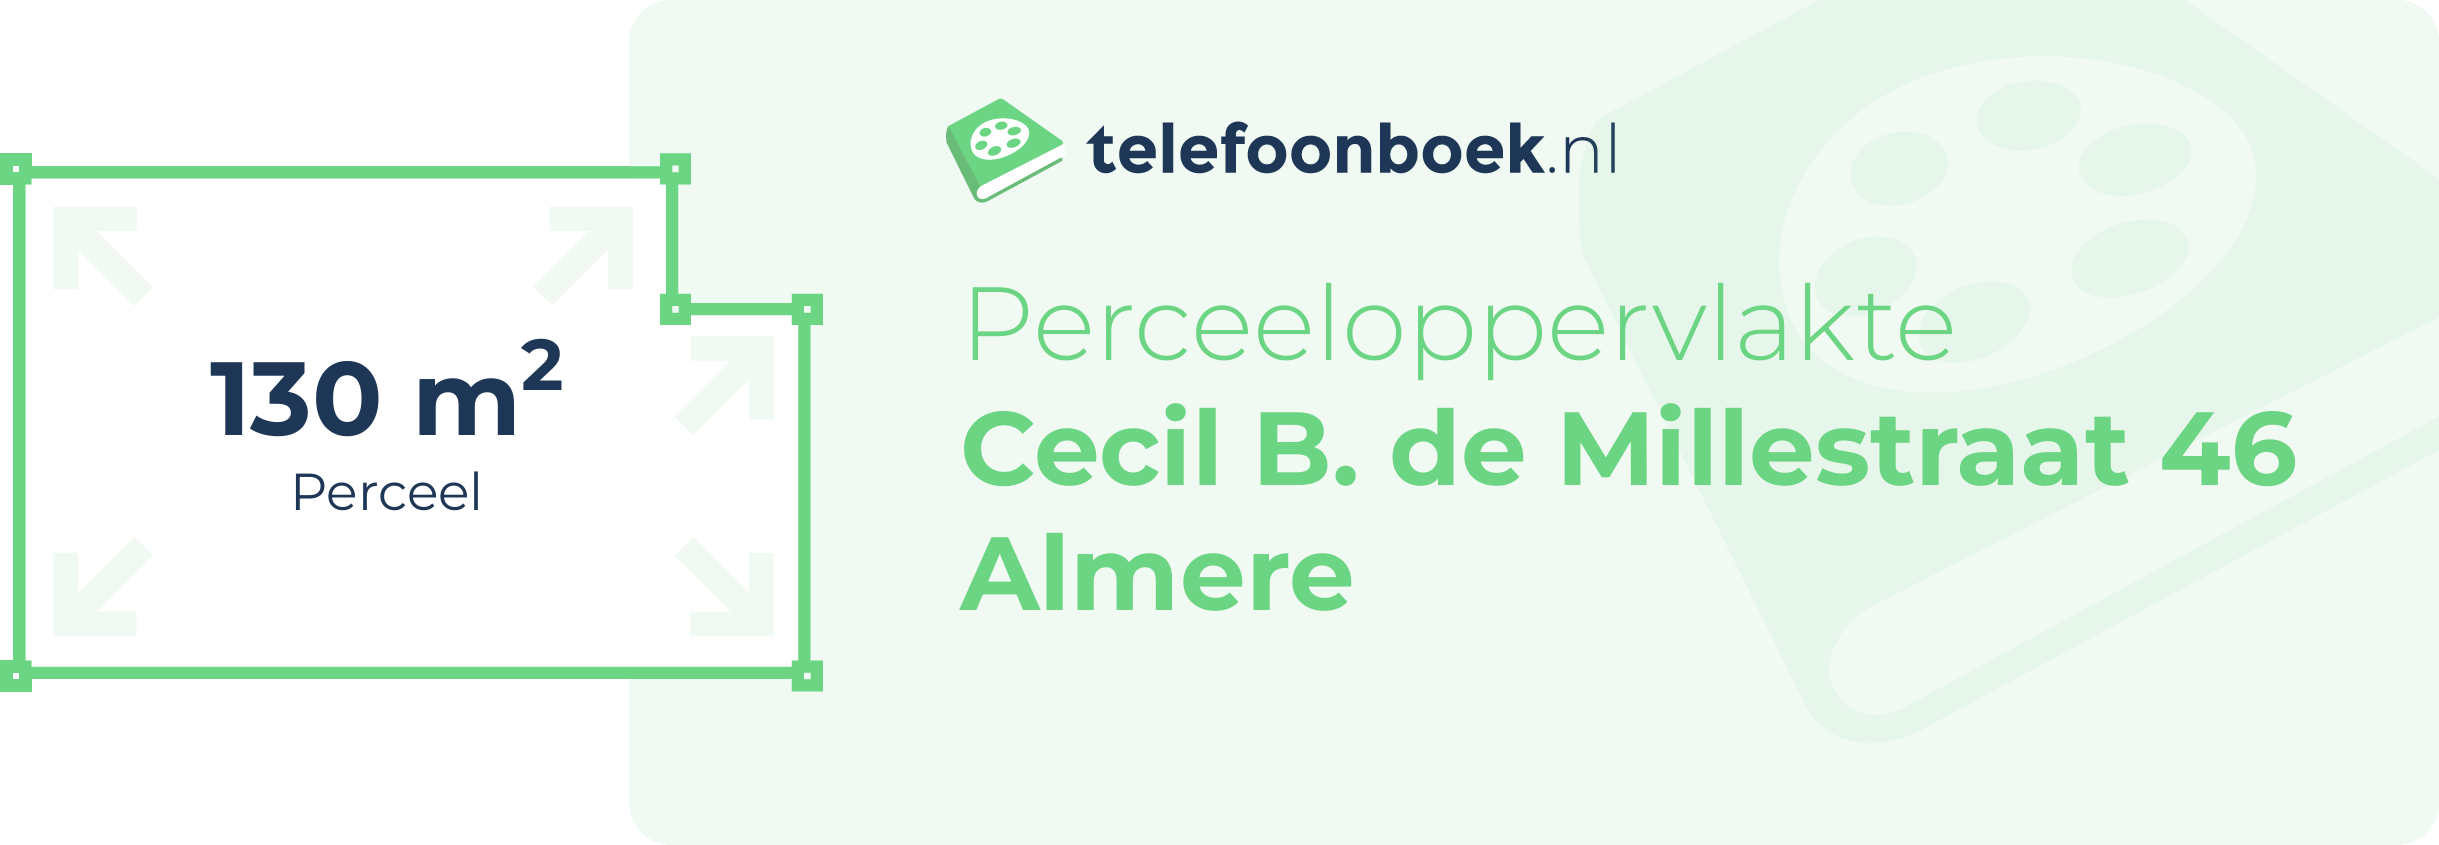 Perceeloppervlakte Cecil B. De Millestraat 46 Almere